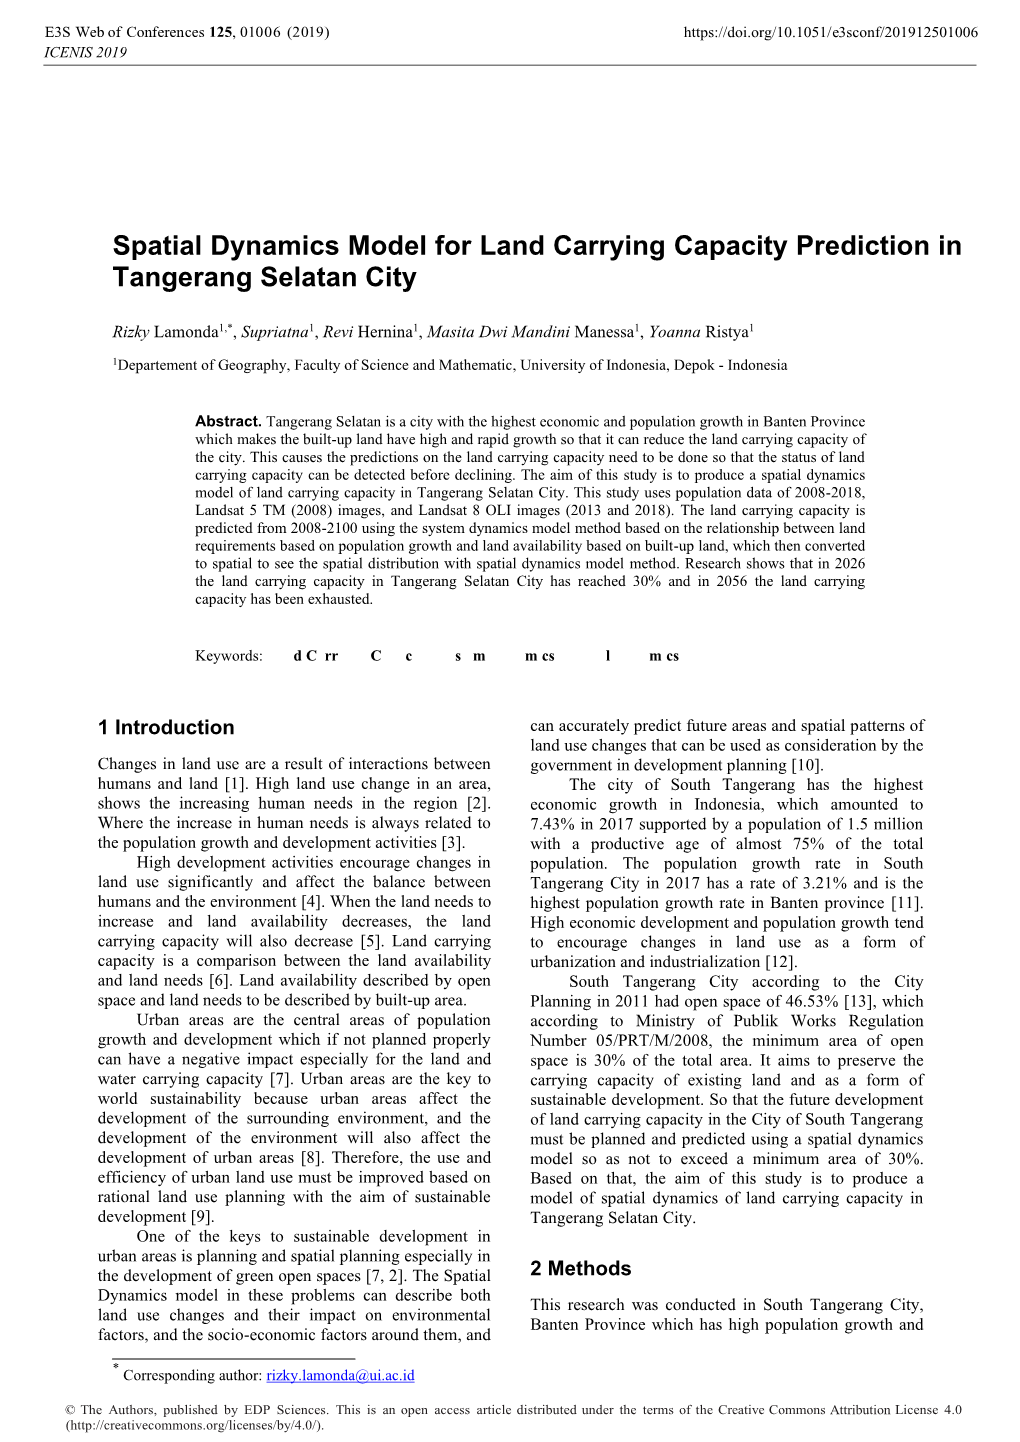 Spatial Dynamics Model for Land Carrying Capacity Prediction in Tangerang Selatan City